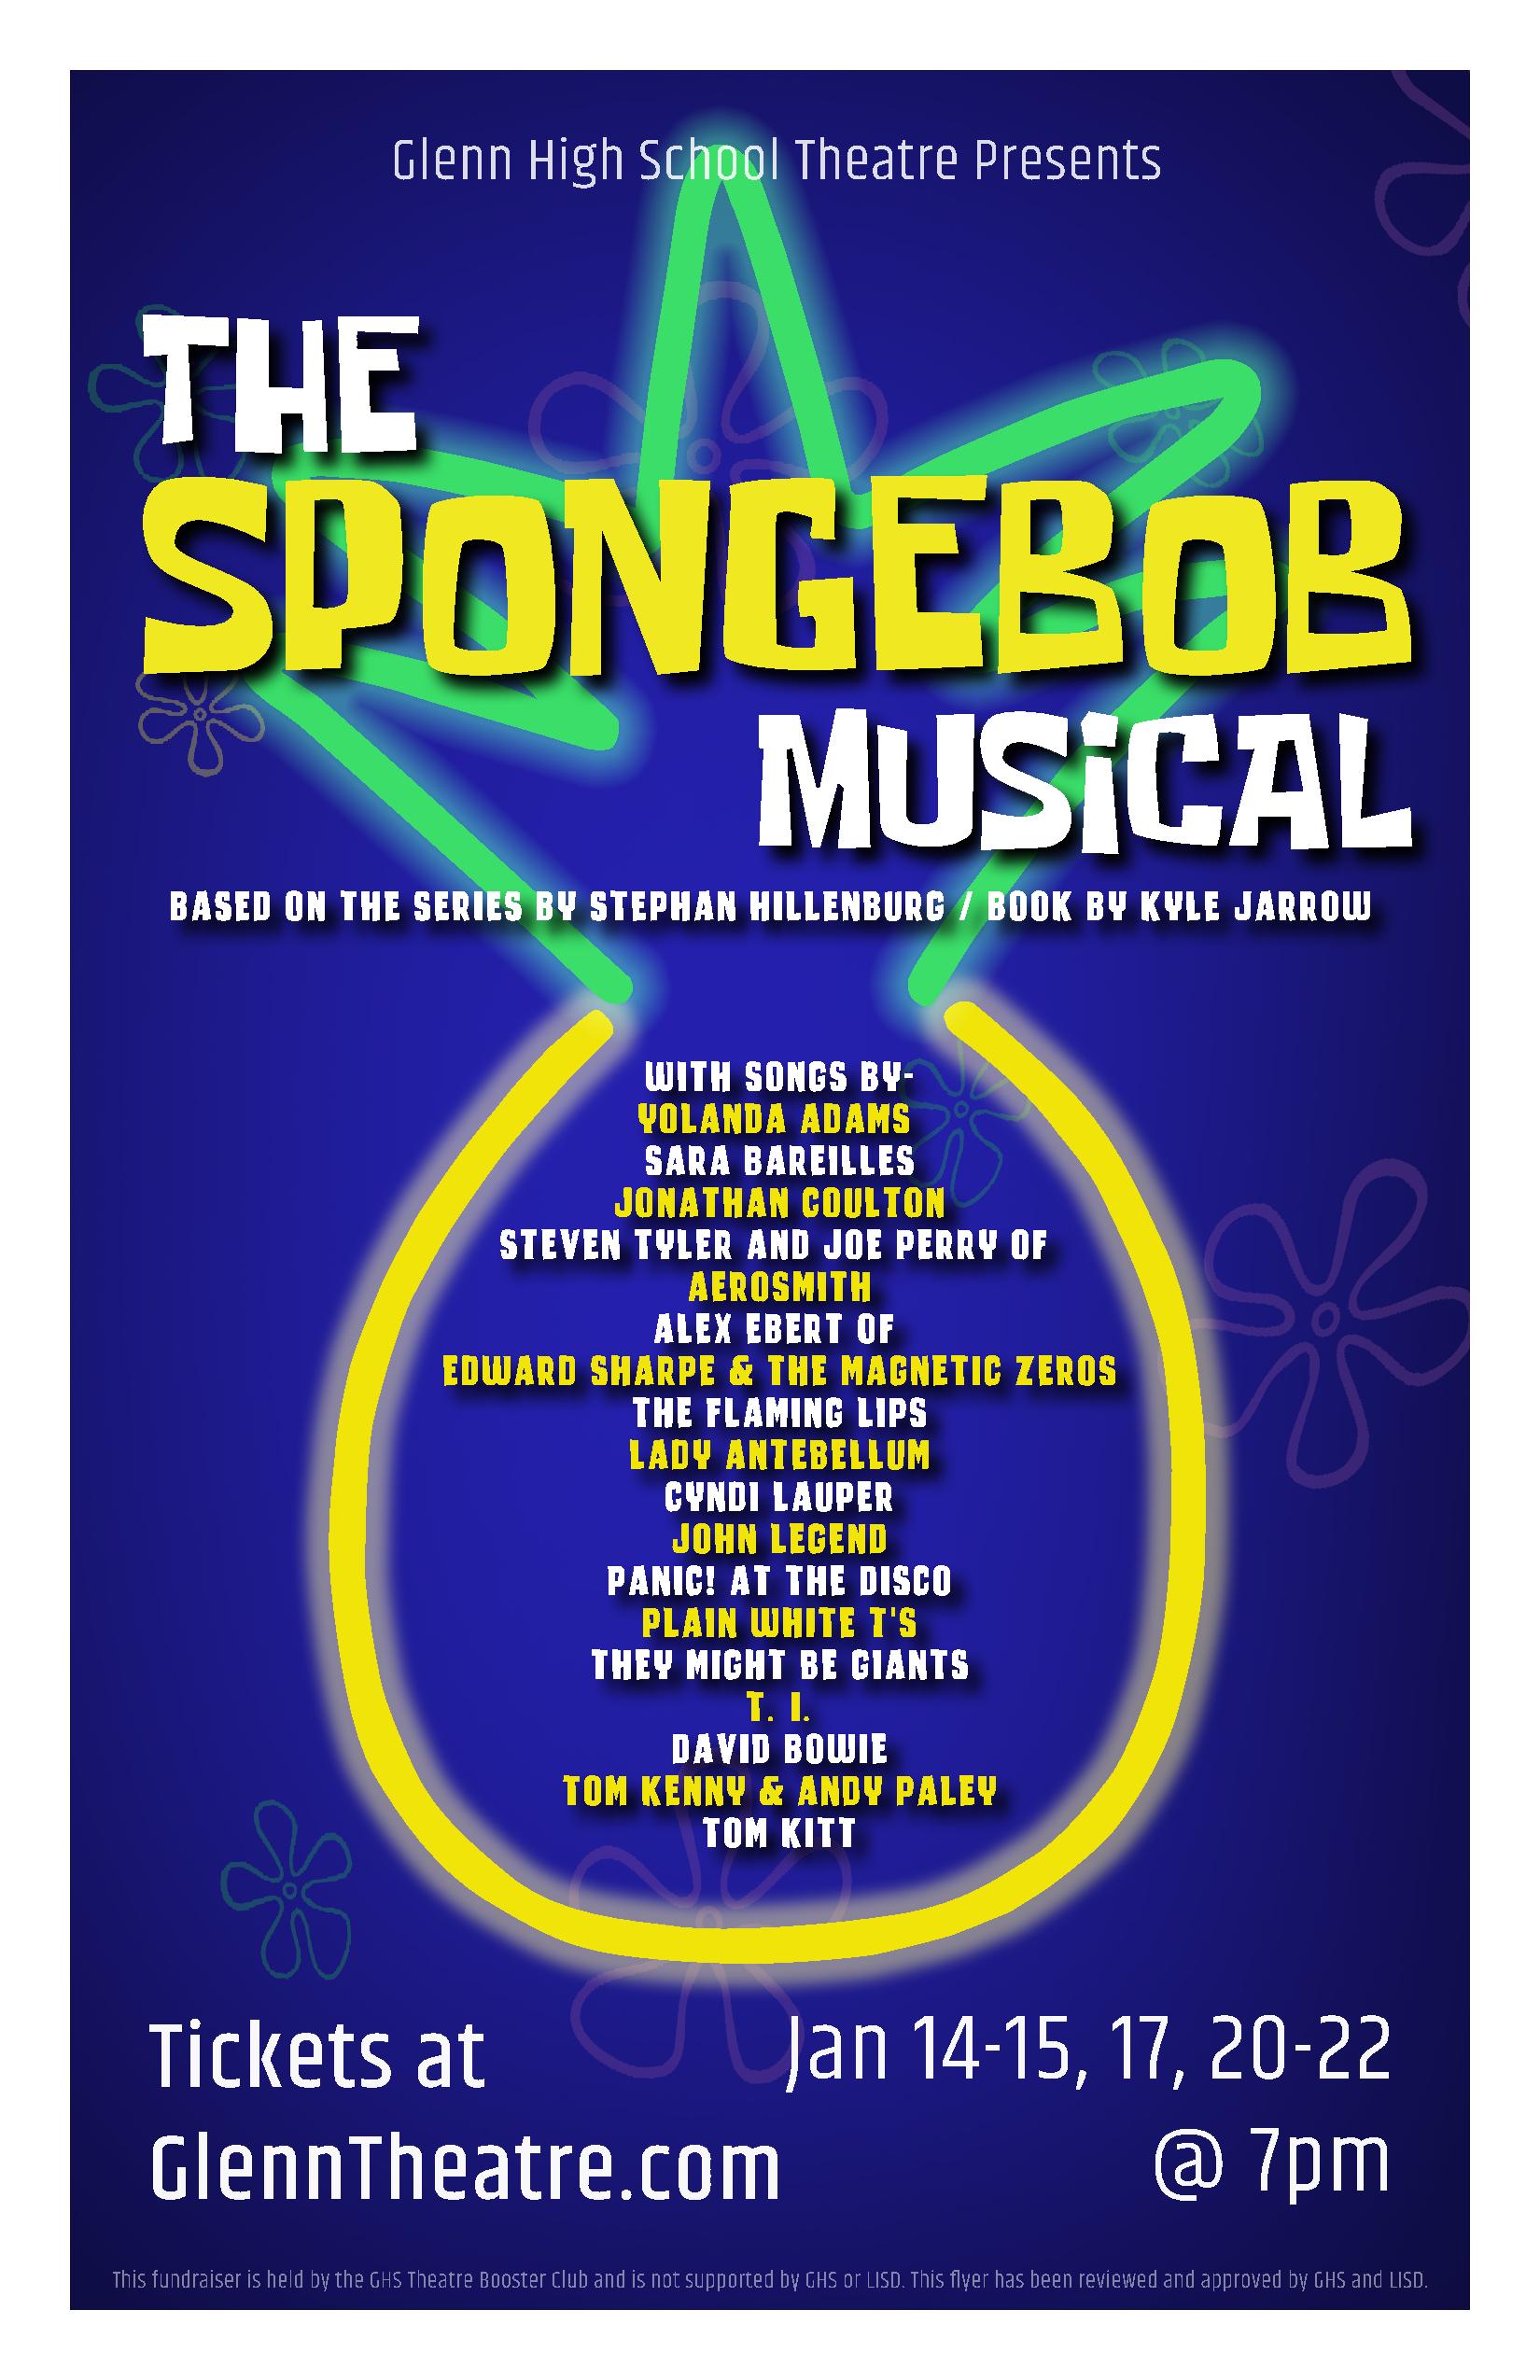 Spongebob, The Musical